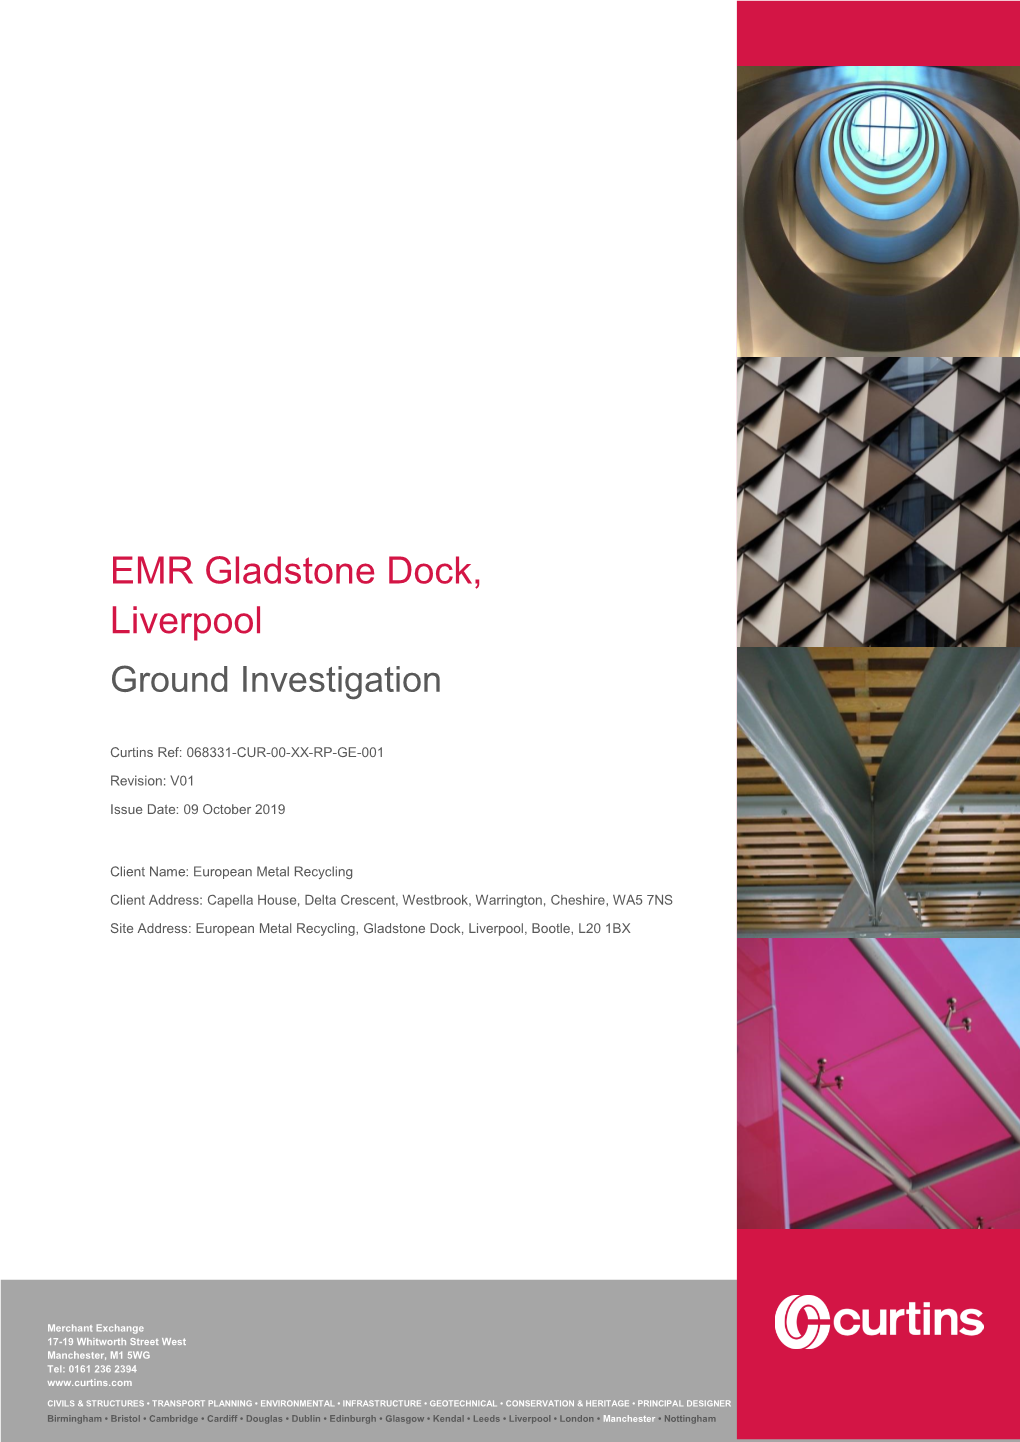 EMR Gladstone Dock, Liverpool Ground Investigation